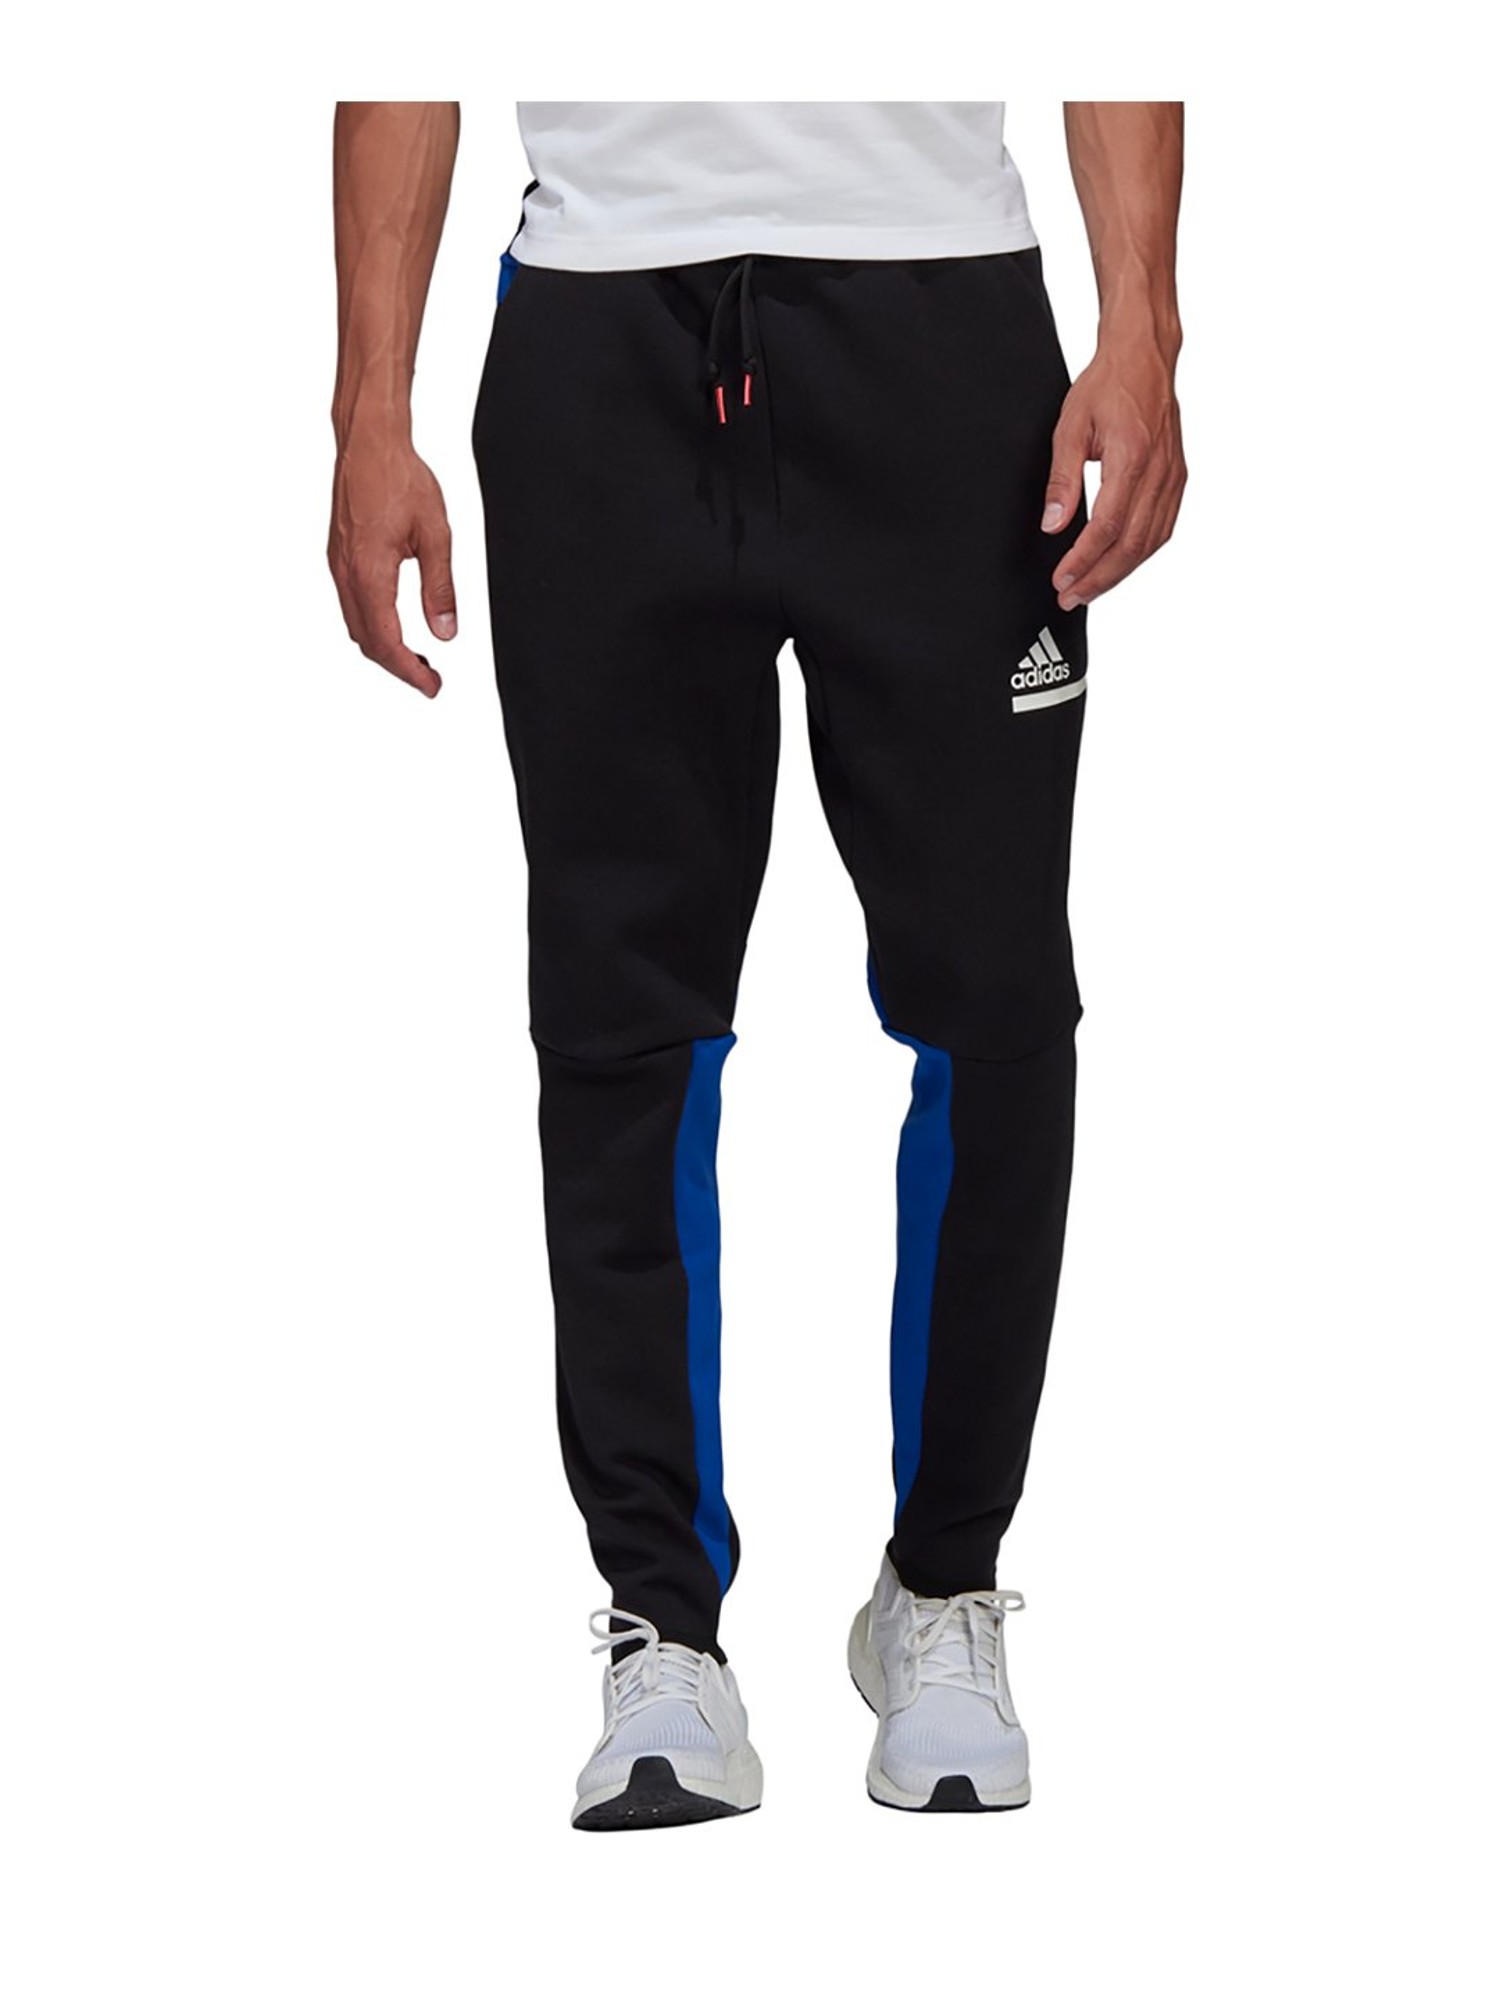 Buy Black  Blue Track Pants for Men by ADIDAS Online  Ajiocom